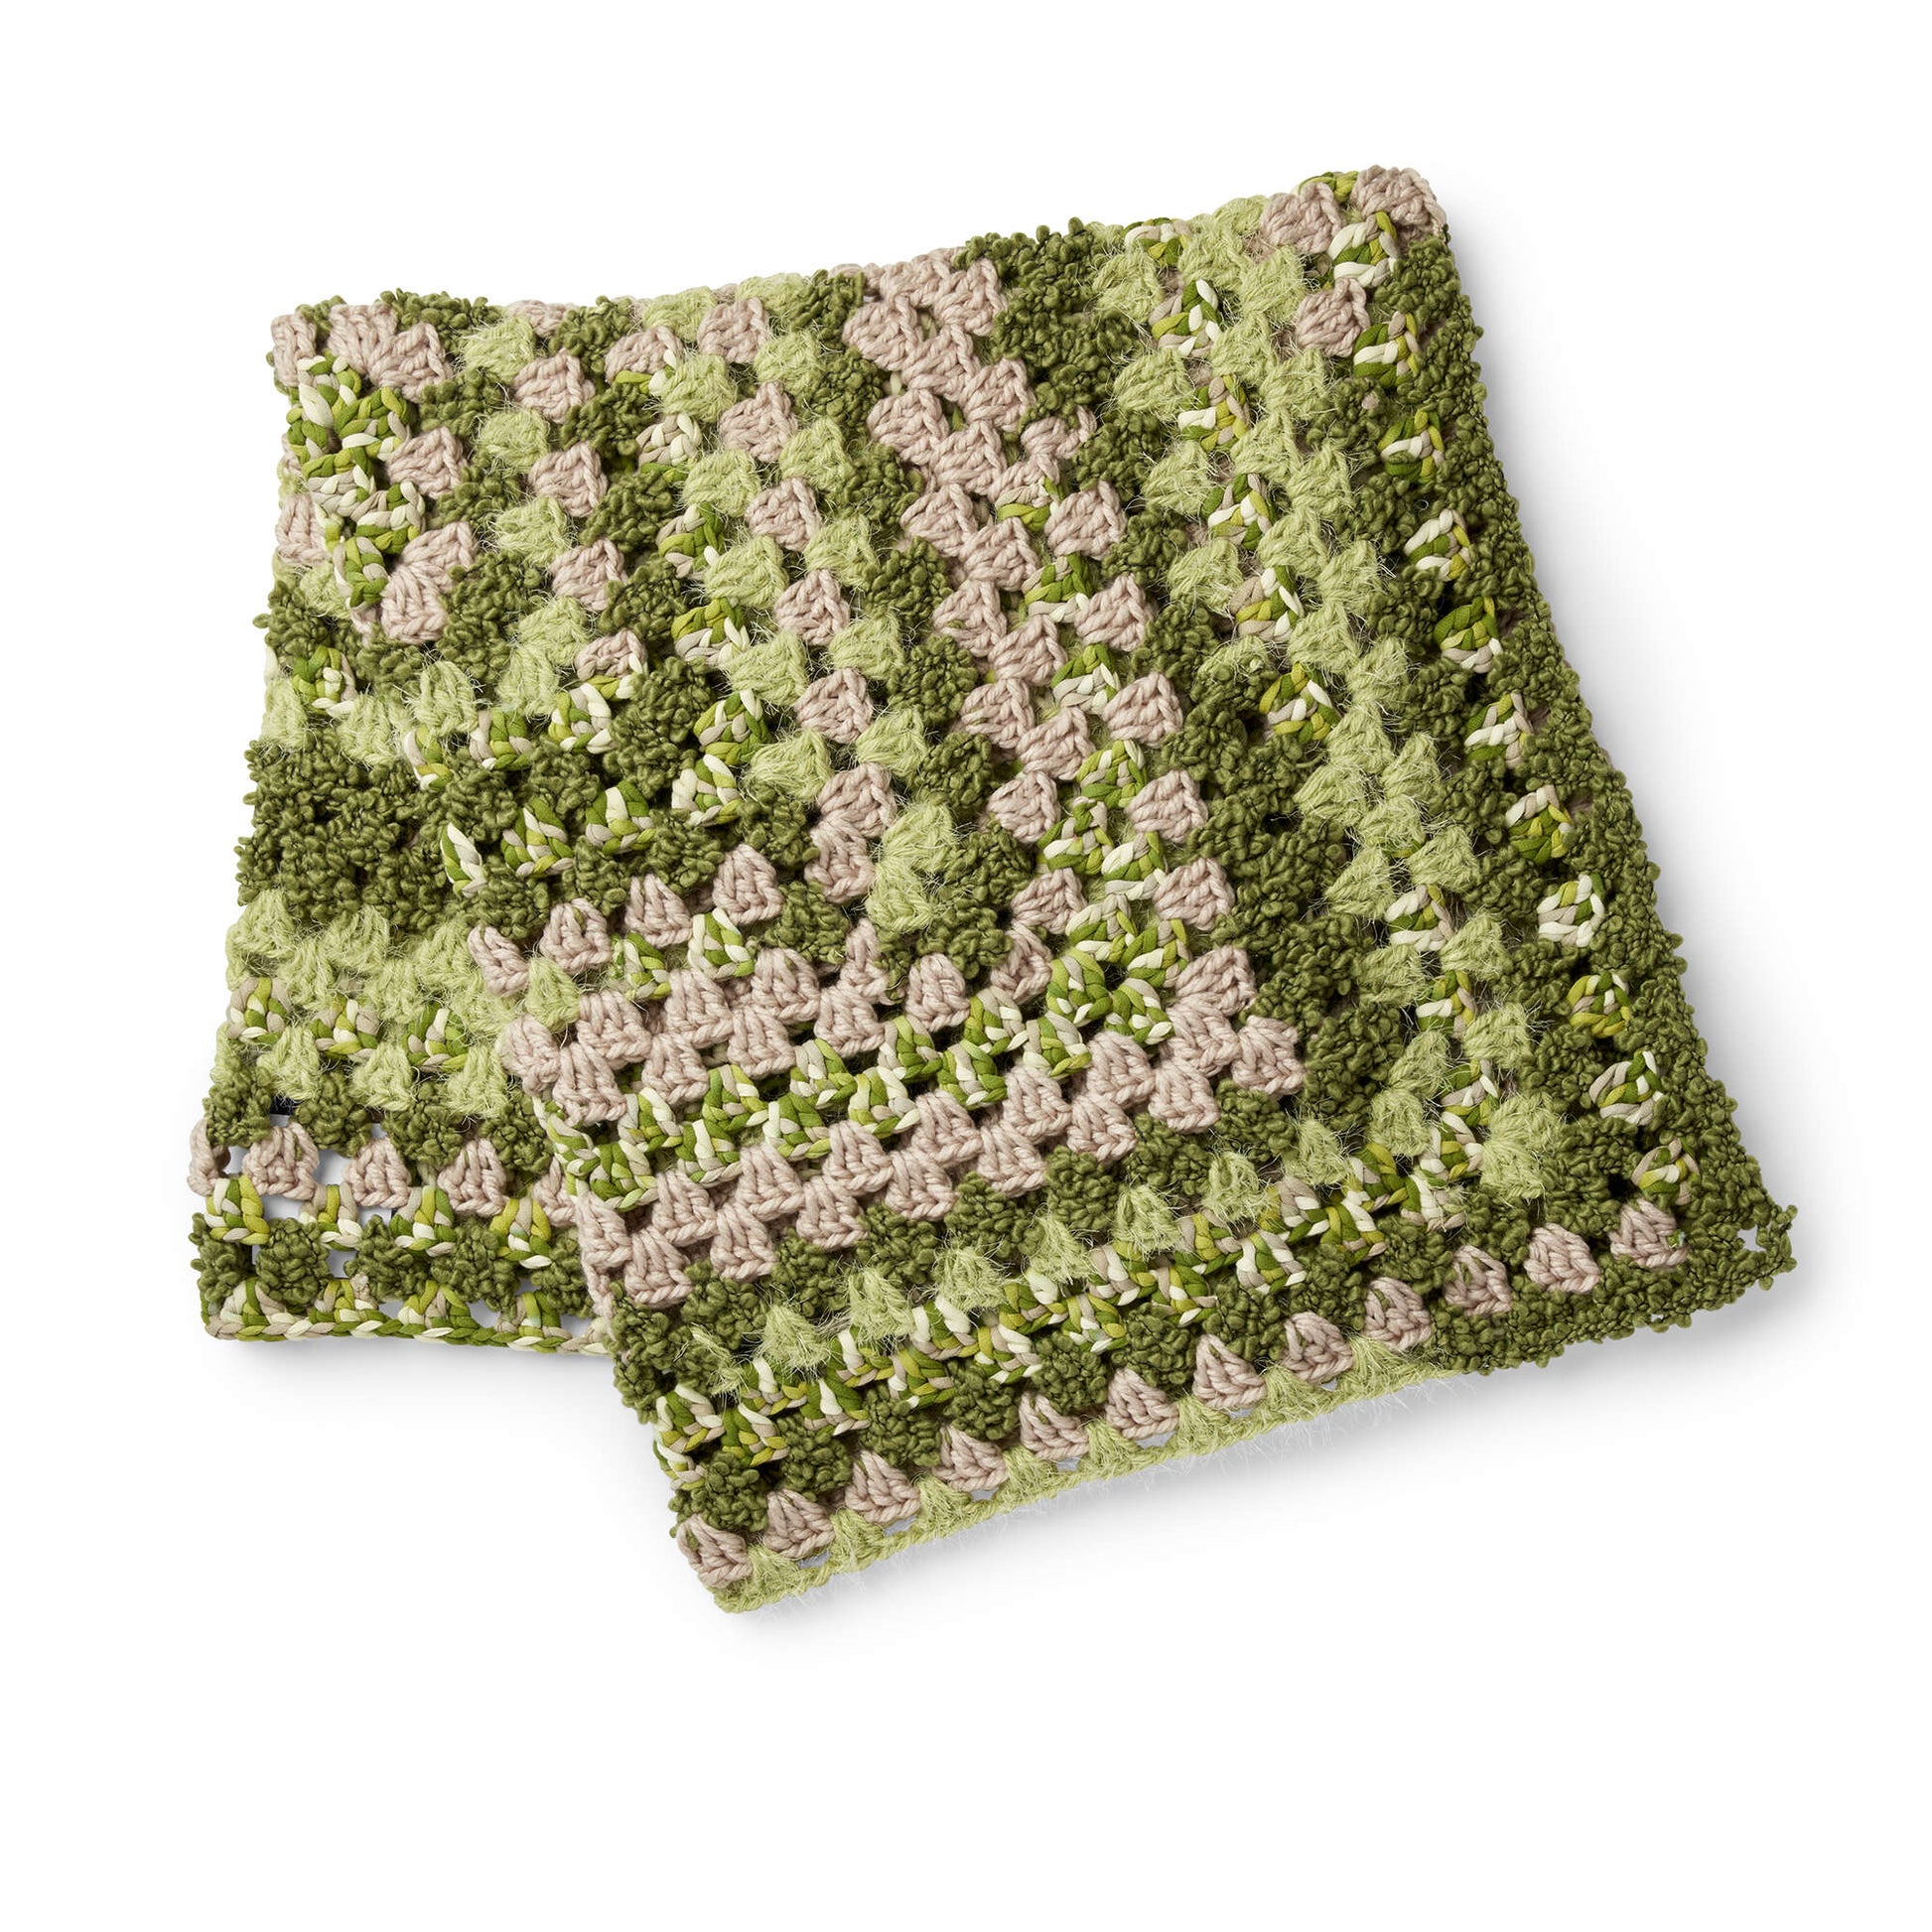 Bernat Make It Fast Crochet Blanket Crochet Blanket made in Bernat Mix Home yarn